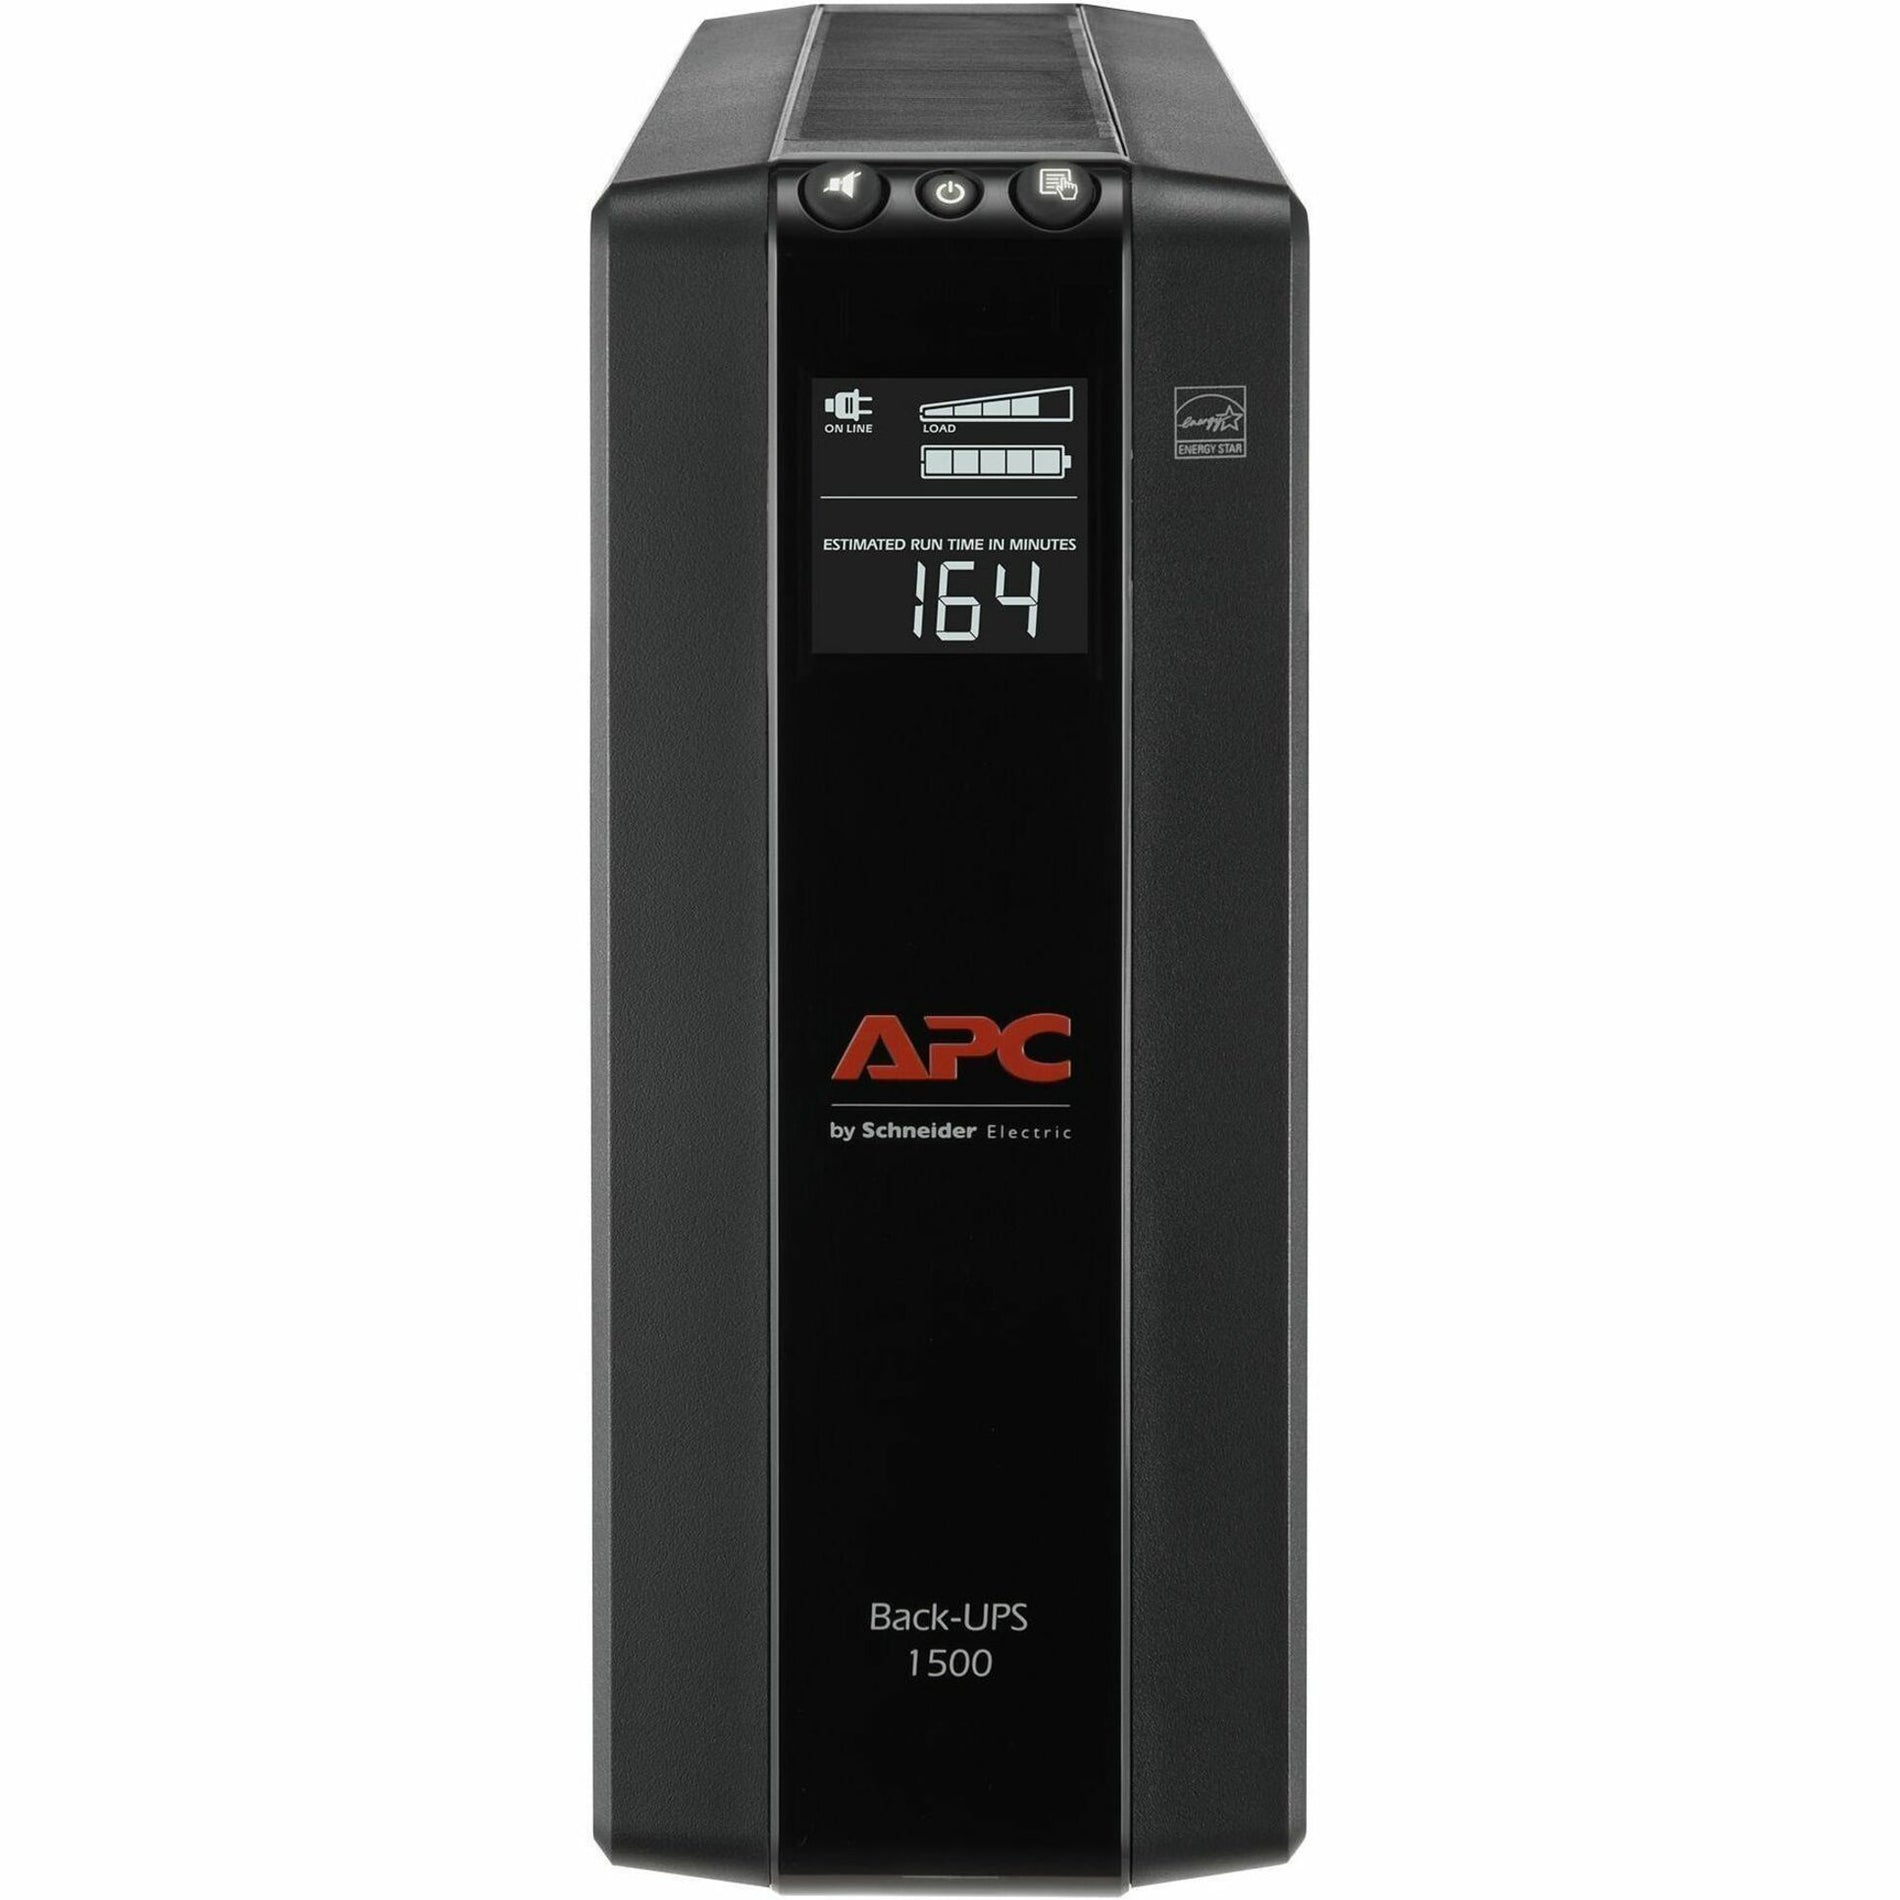 APC BX1500M Back-UPS Pro Compact Tower 1500VA AVR LCD 120V, Energy Star, 3 Year Warranty